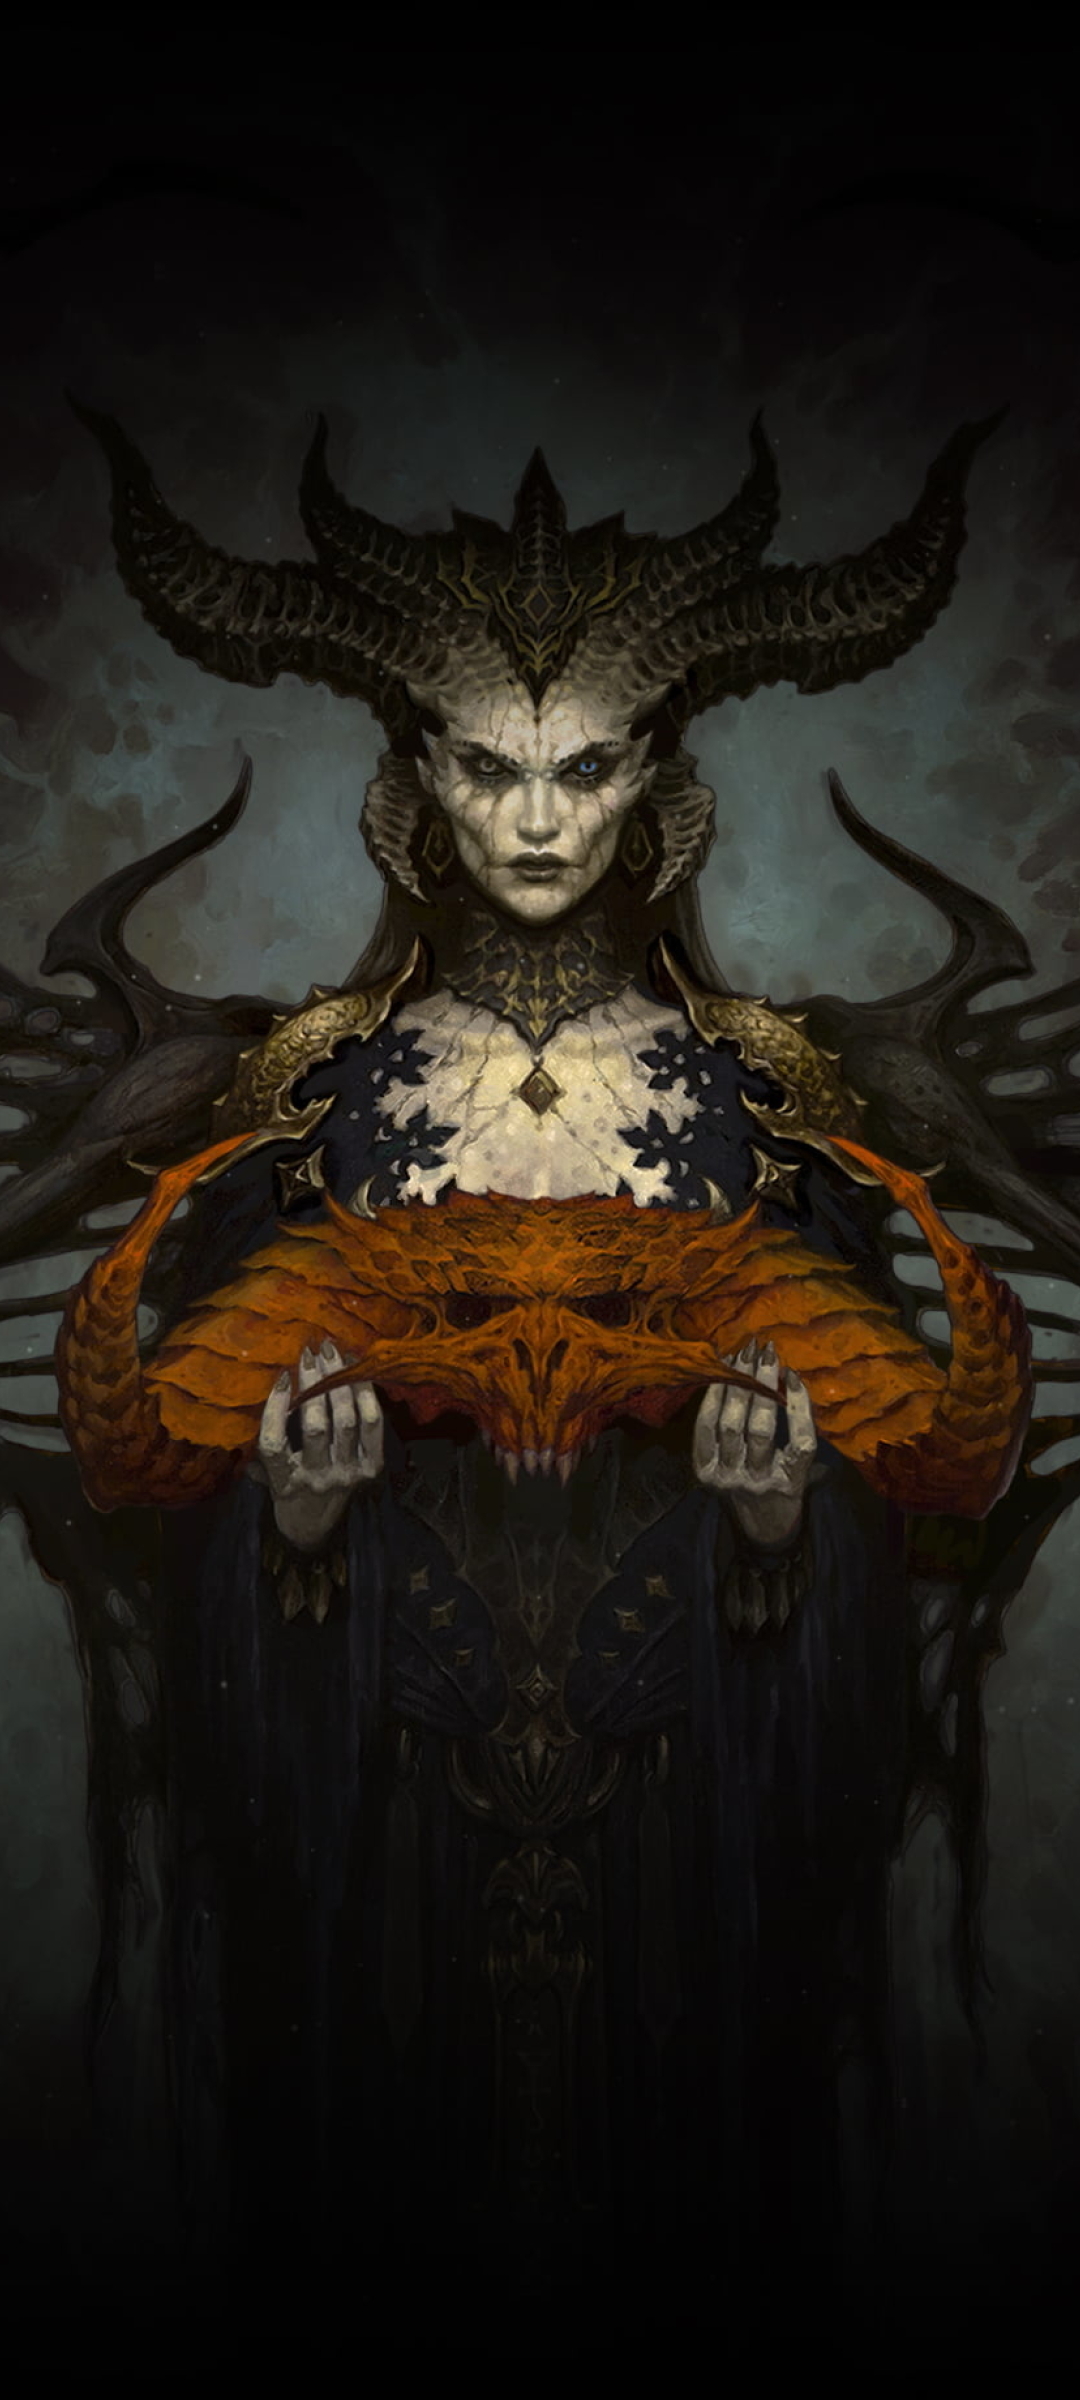 Diablo 4 Lilith Wallpaper